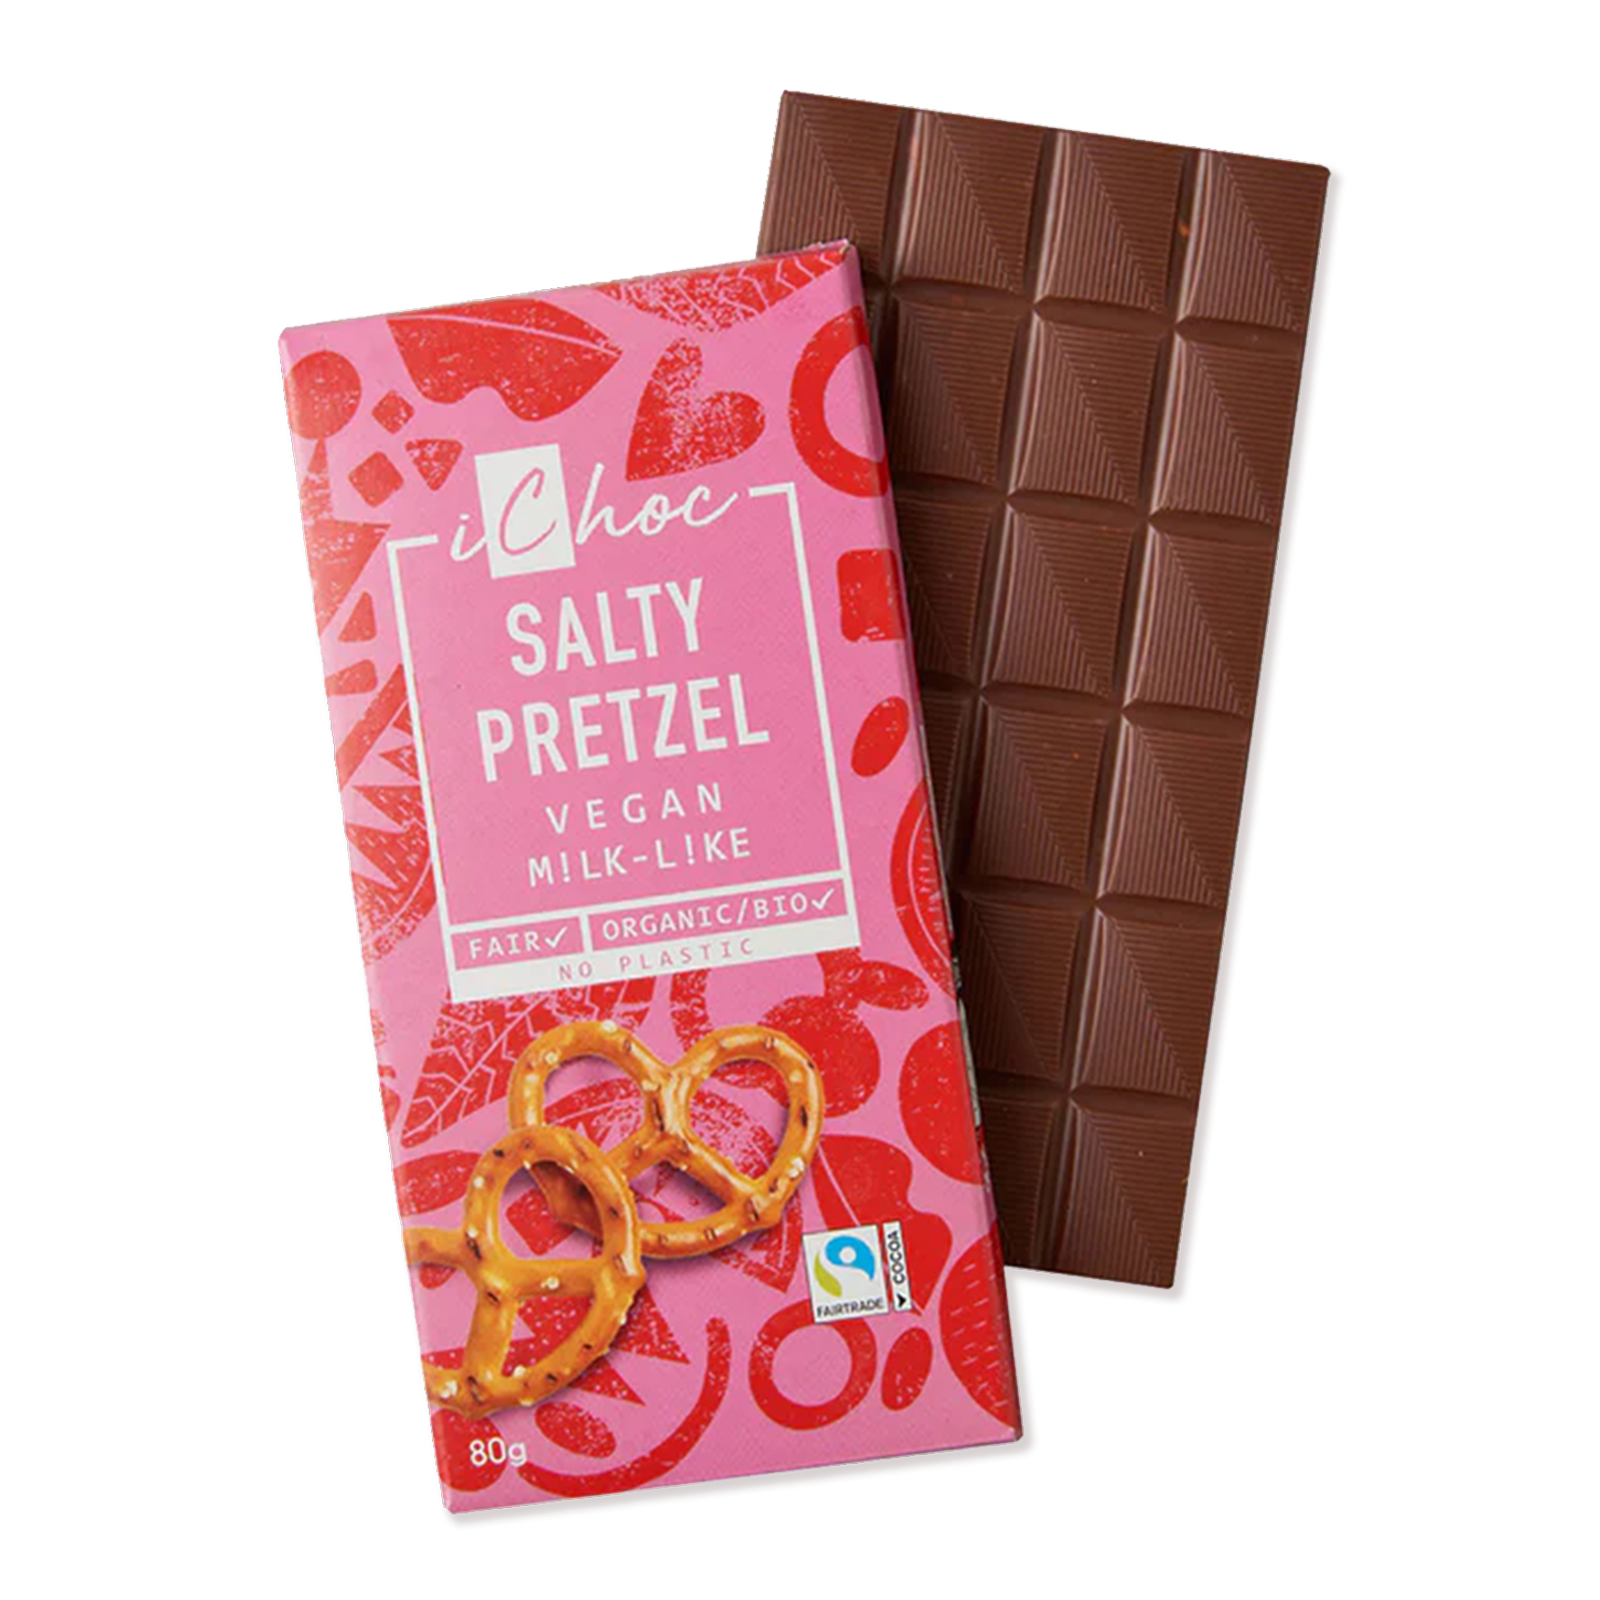 Certified Organic Dairy-Free Chocolate from Germany - Salty Pretzel (3pc) - Horizon Farms